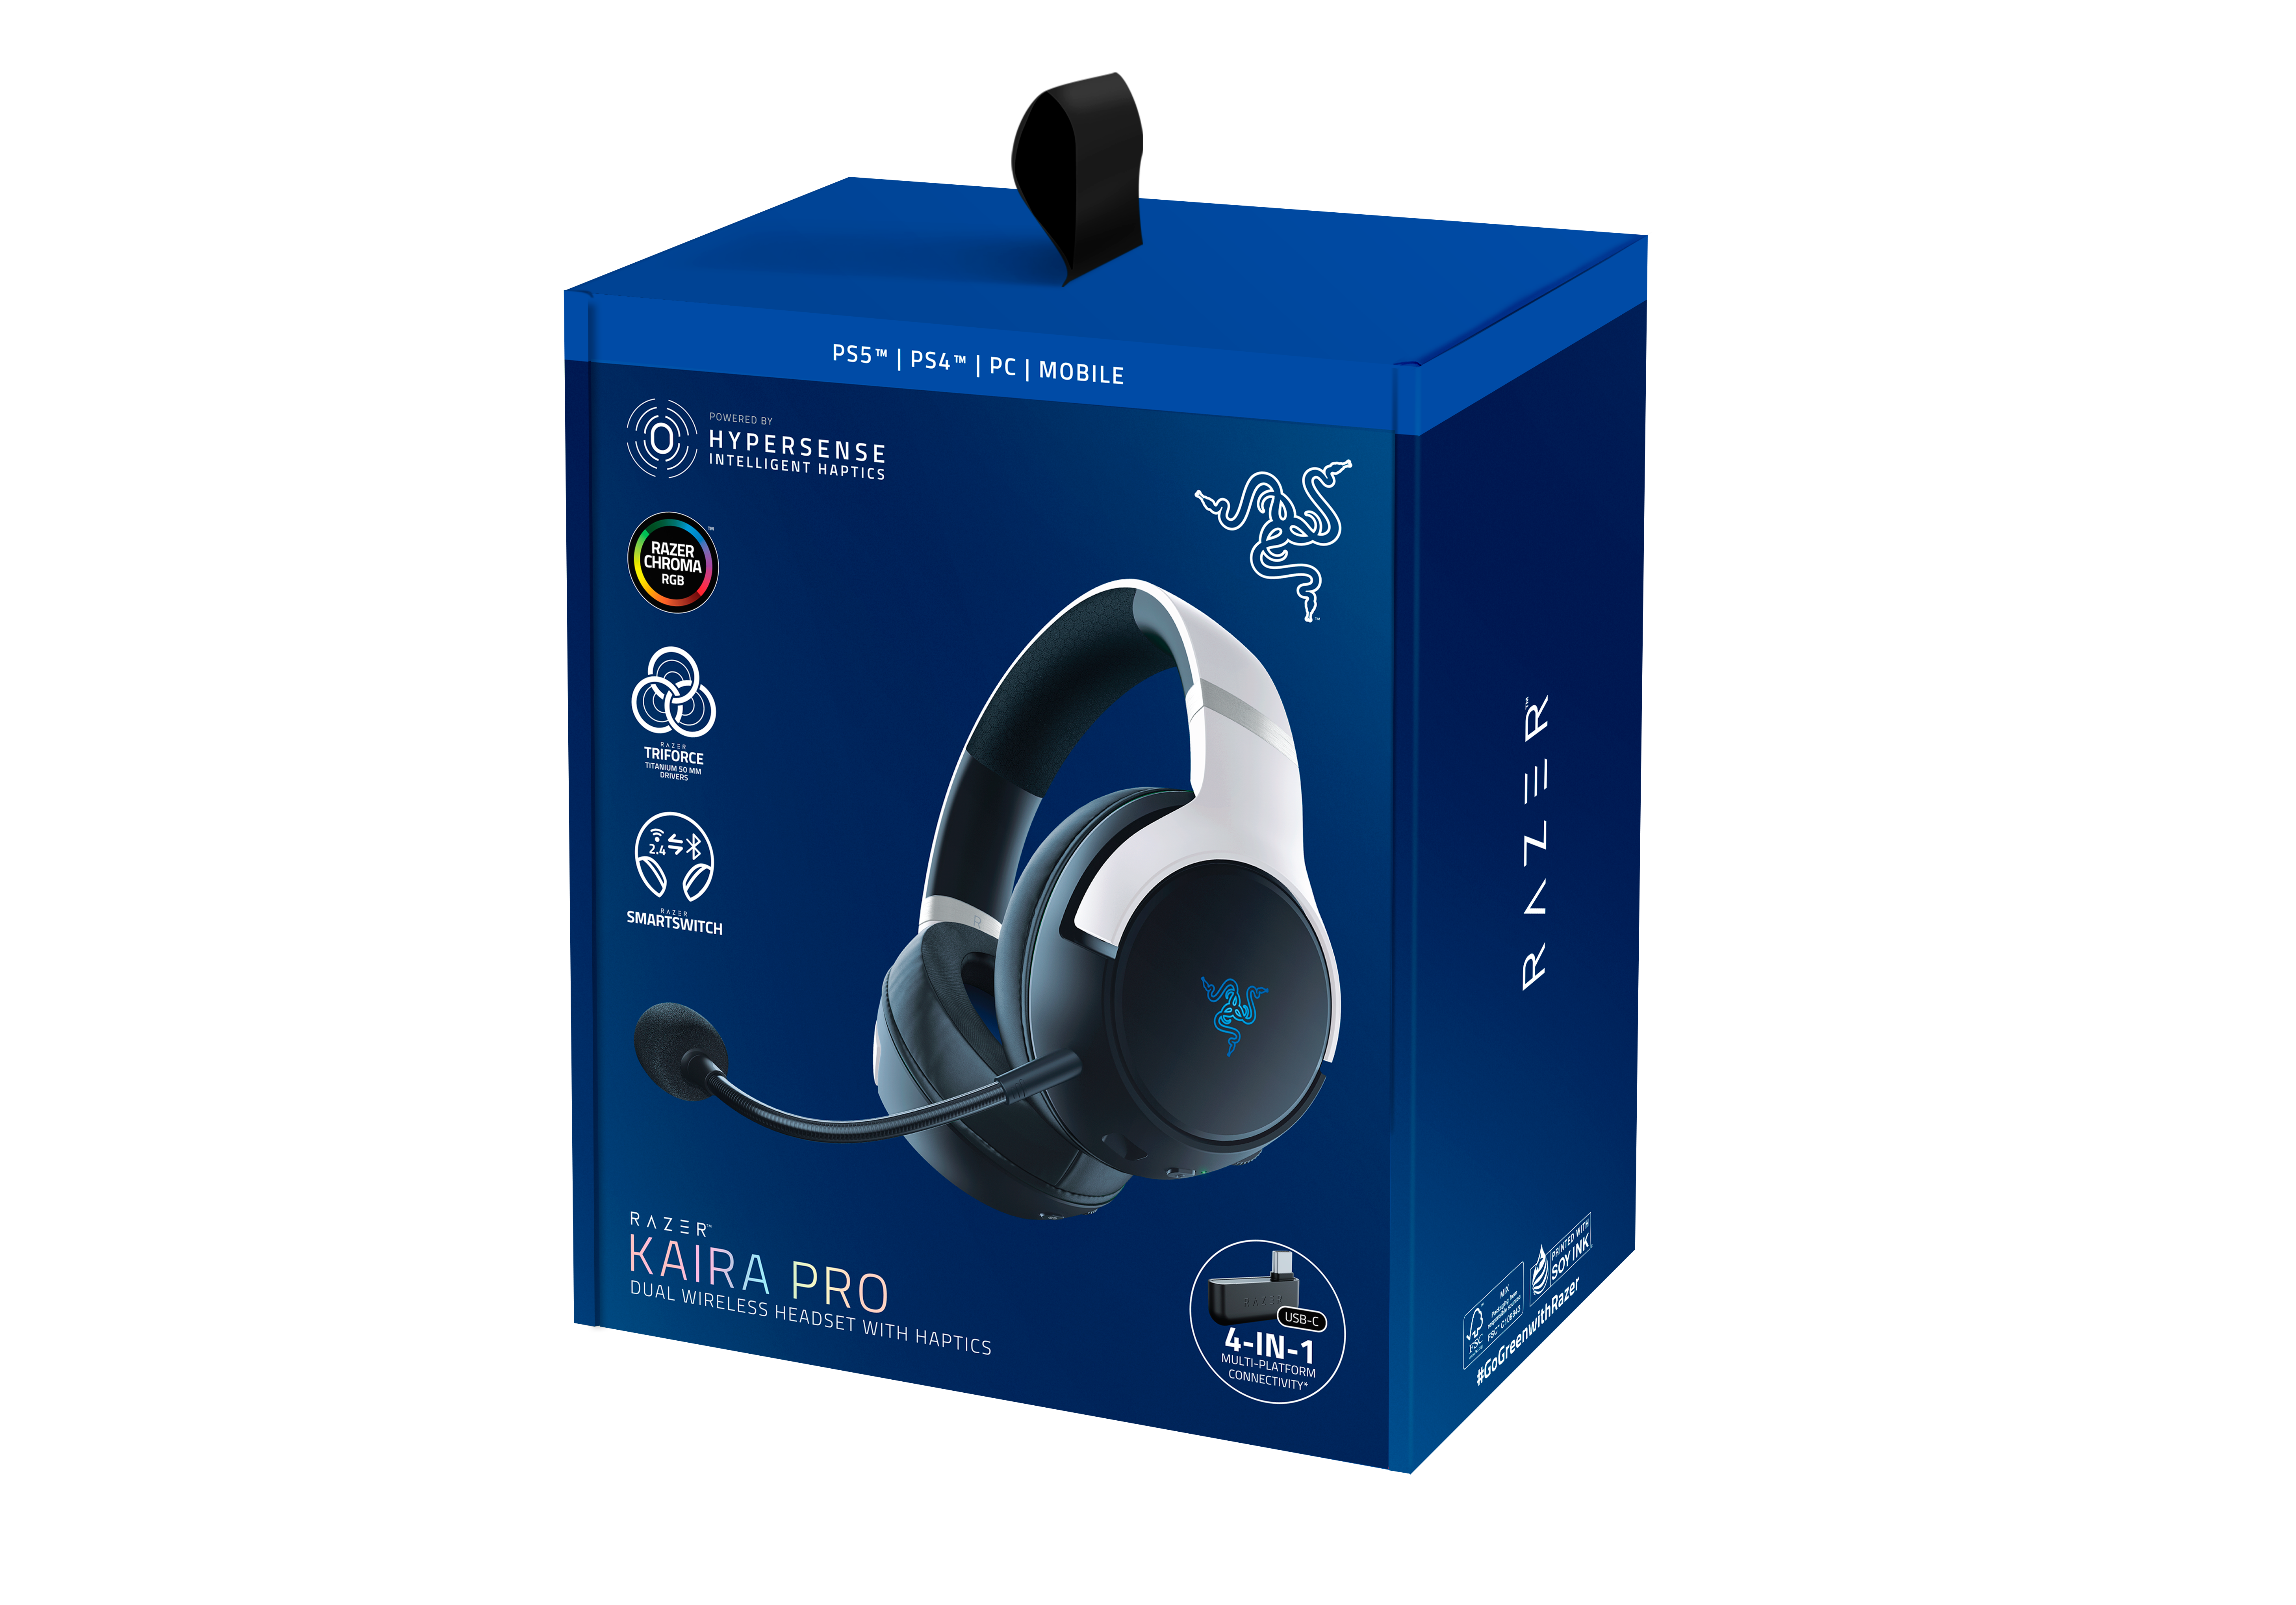 Razer Kaira Pro Dual Wireless Gaming Headset for PlayStation 5 with HyperSense Haptics Technology